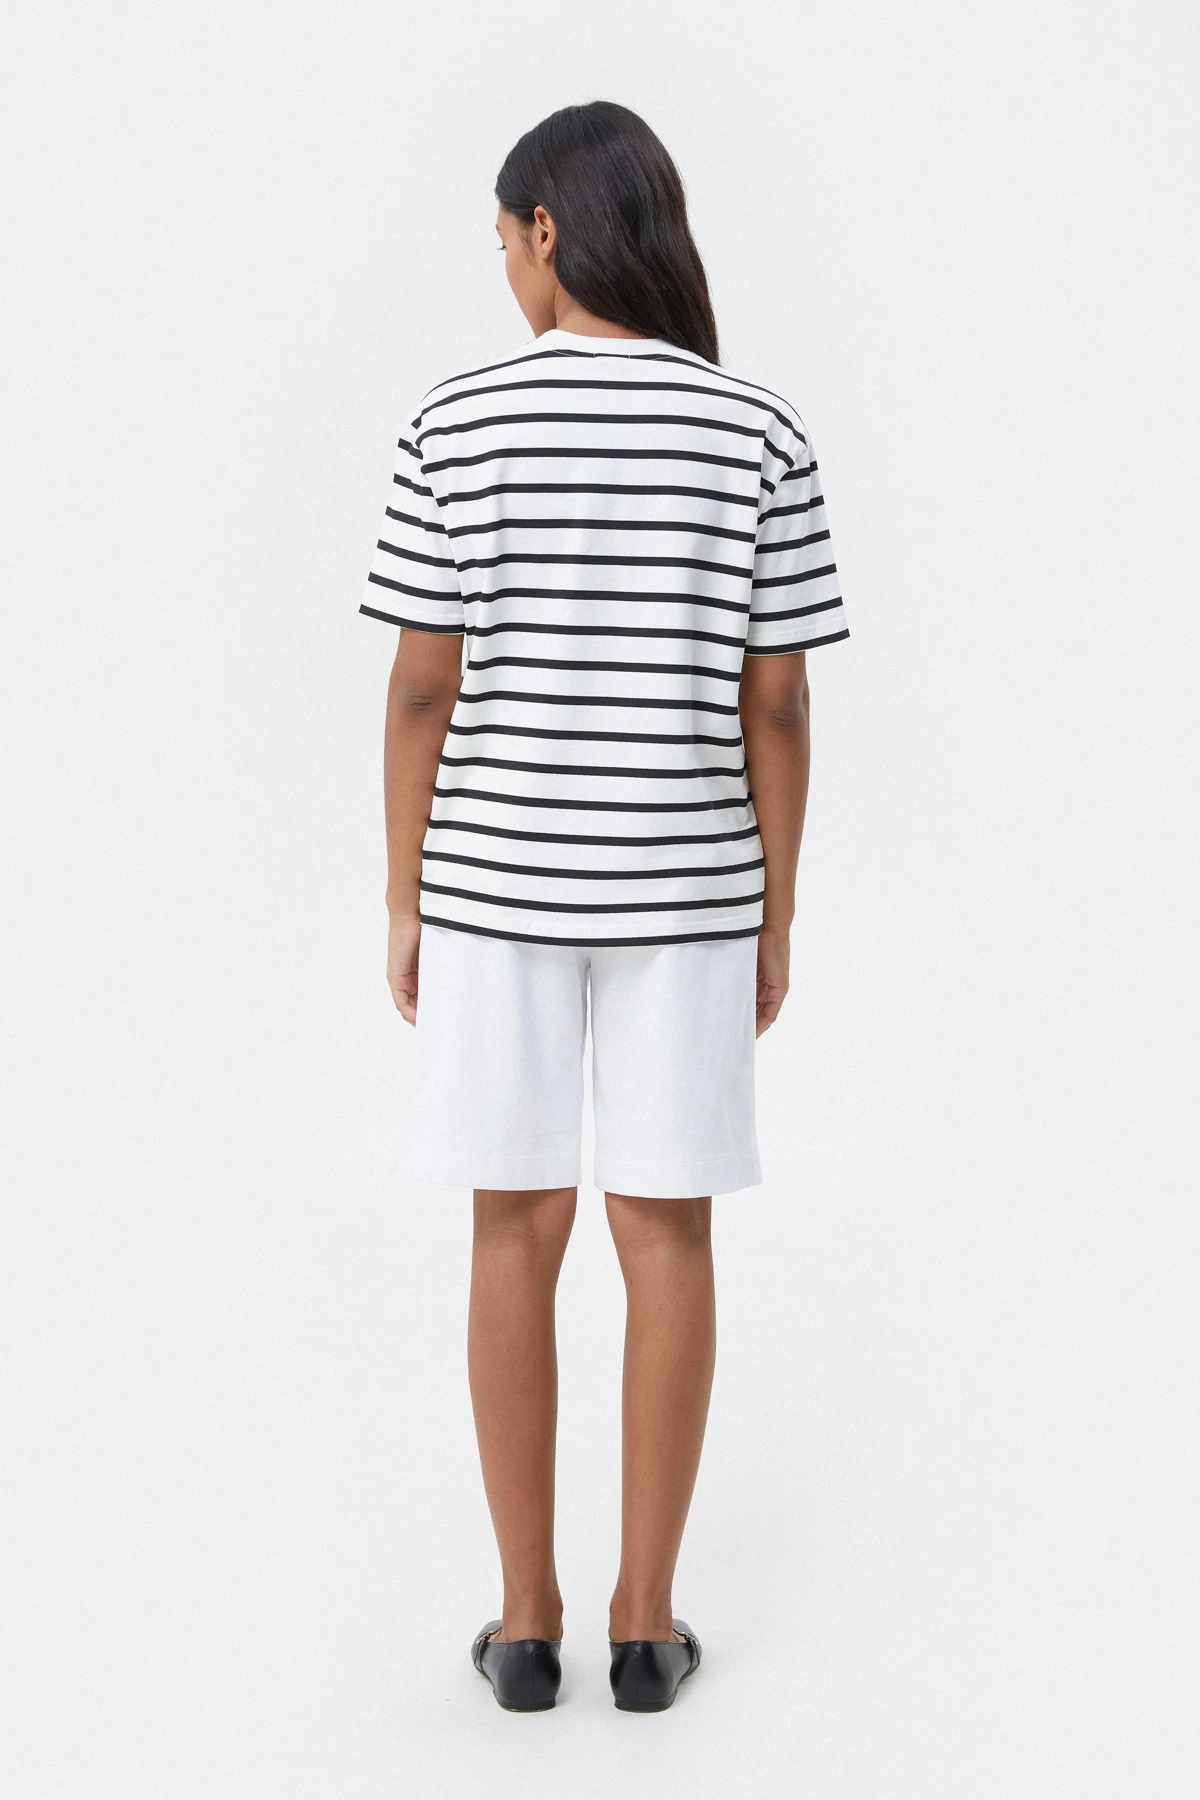 Cotton T-shirt with black stripes, photo 3